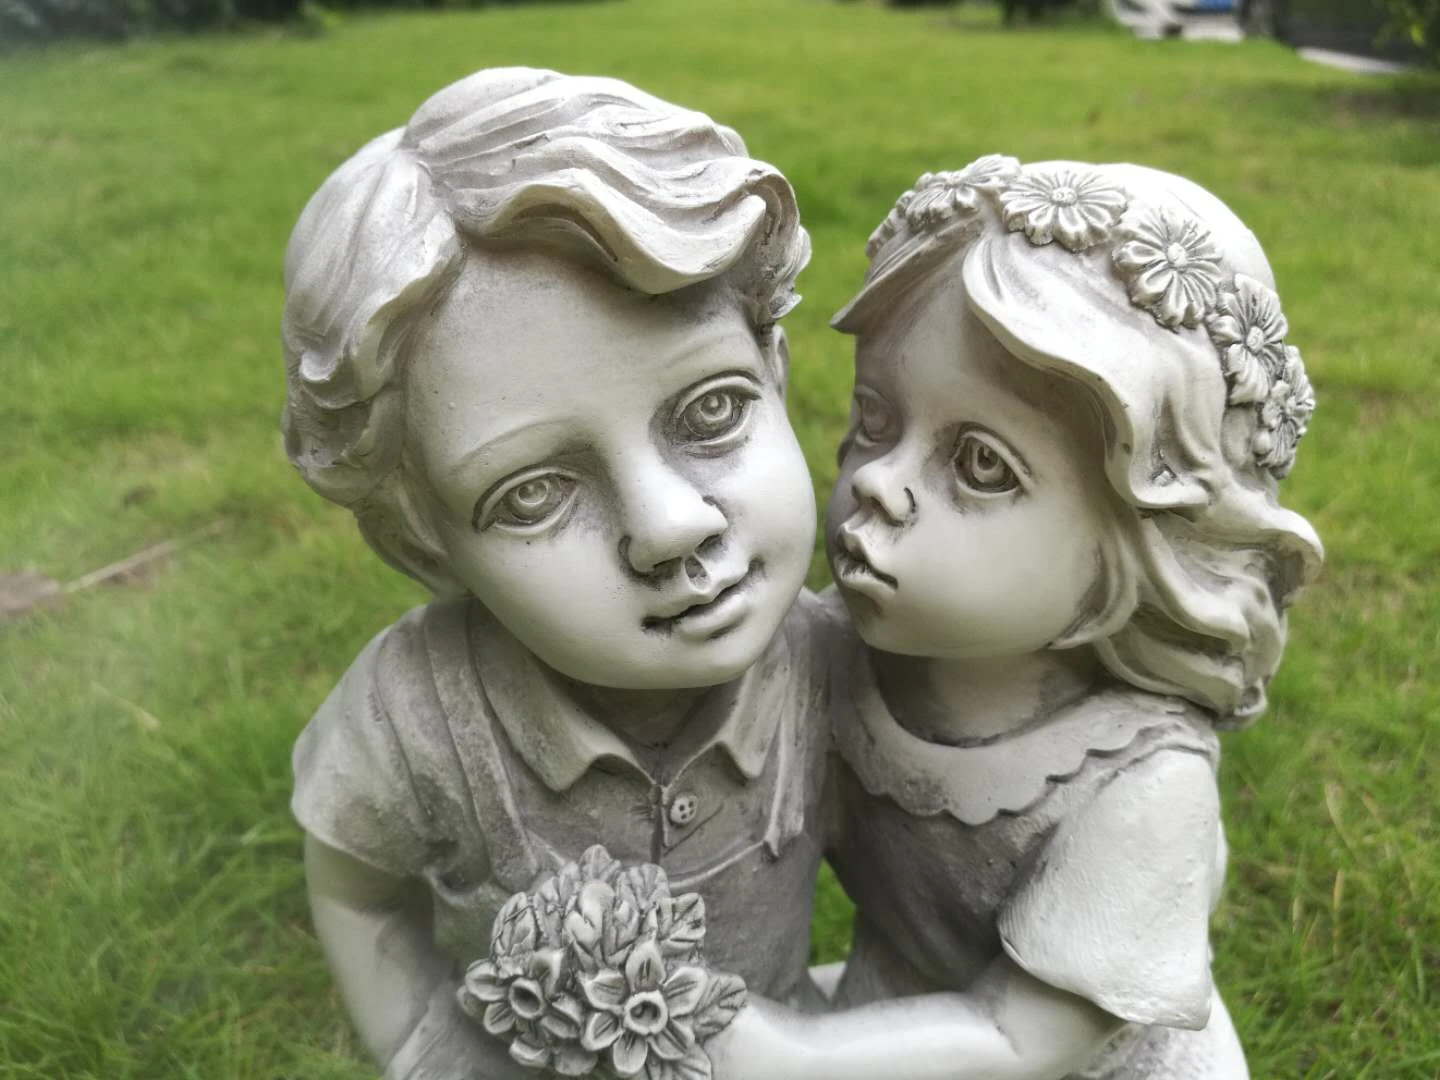 Sweet kiss Resin Figurine home Garden Decoration crafts